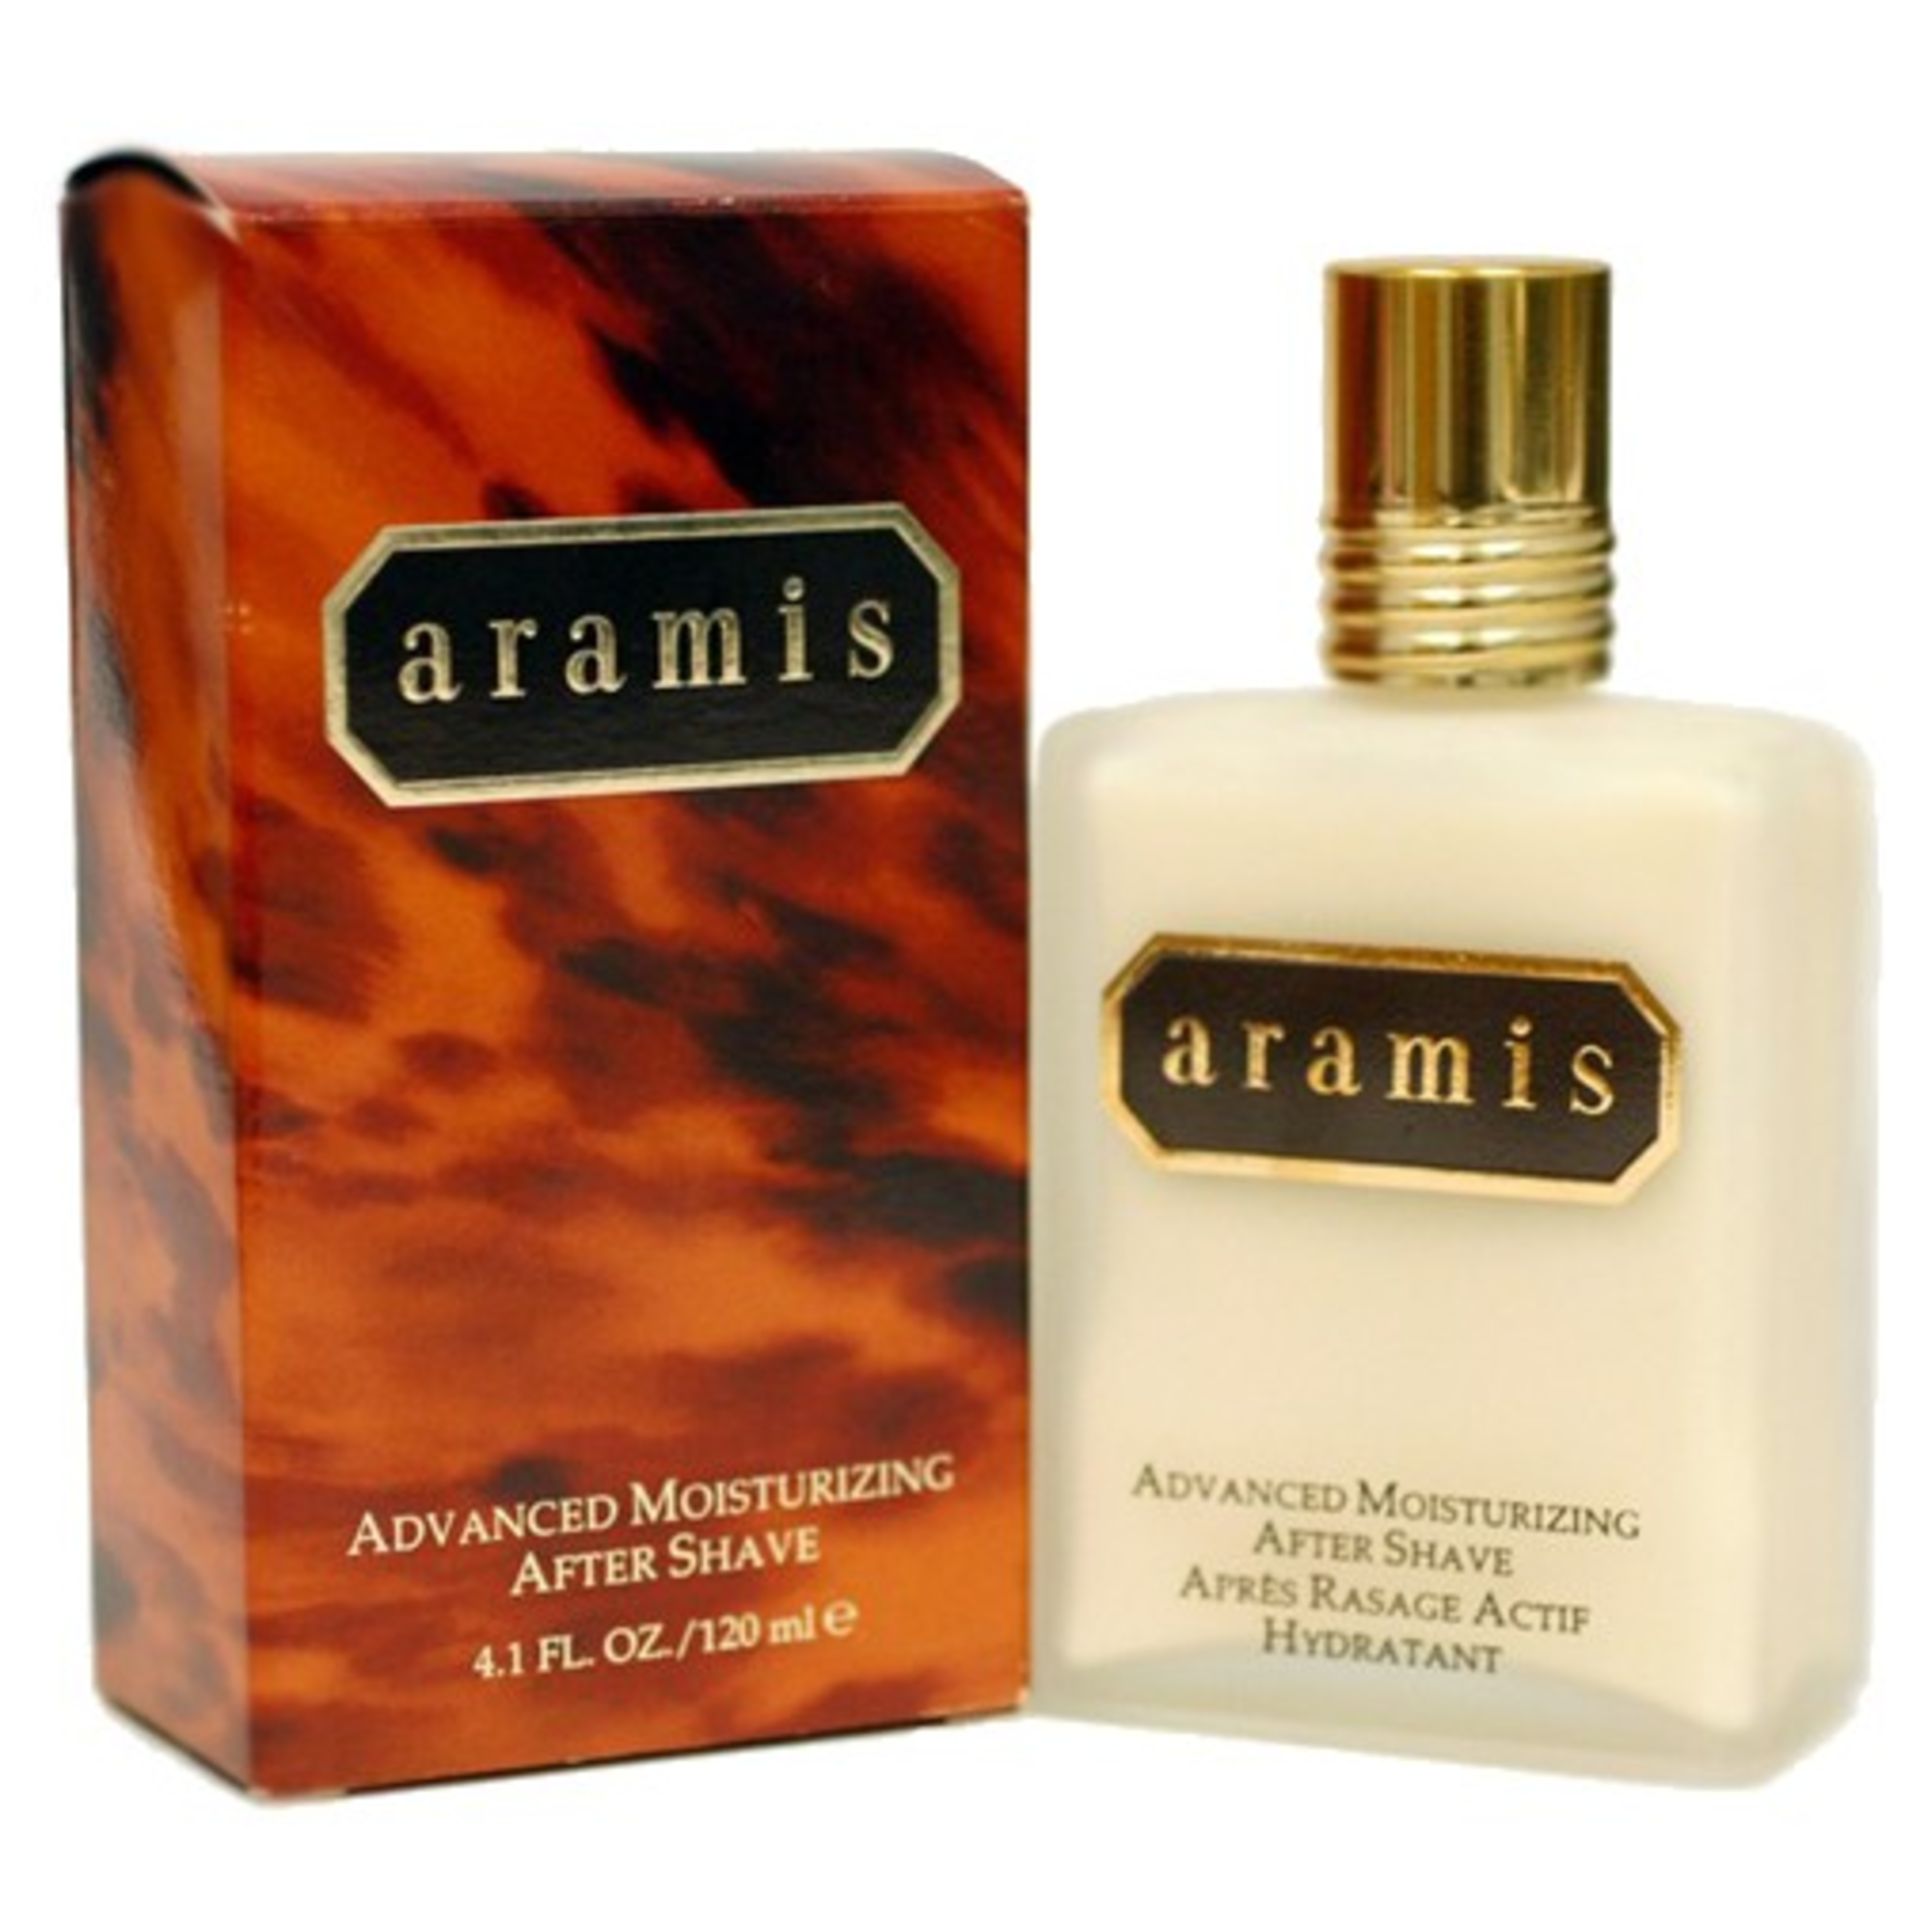 V *TRADE QTY* Brand New Aramis Advanced Moisturising After Shave Balm eBay Price £38.20 X 3 YOUR BID - Image 2 of 2